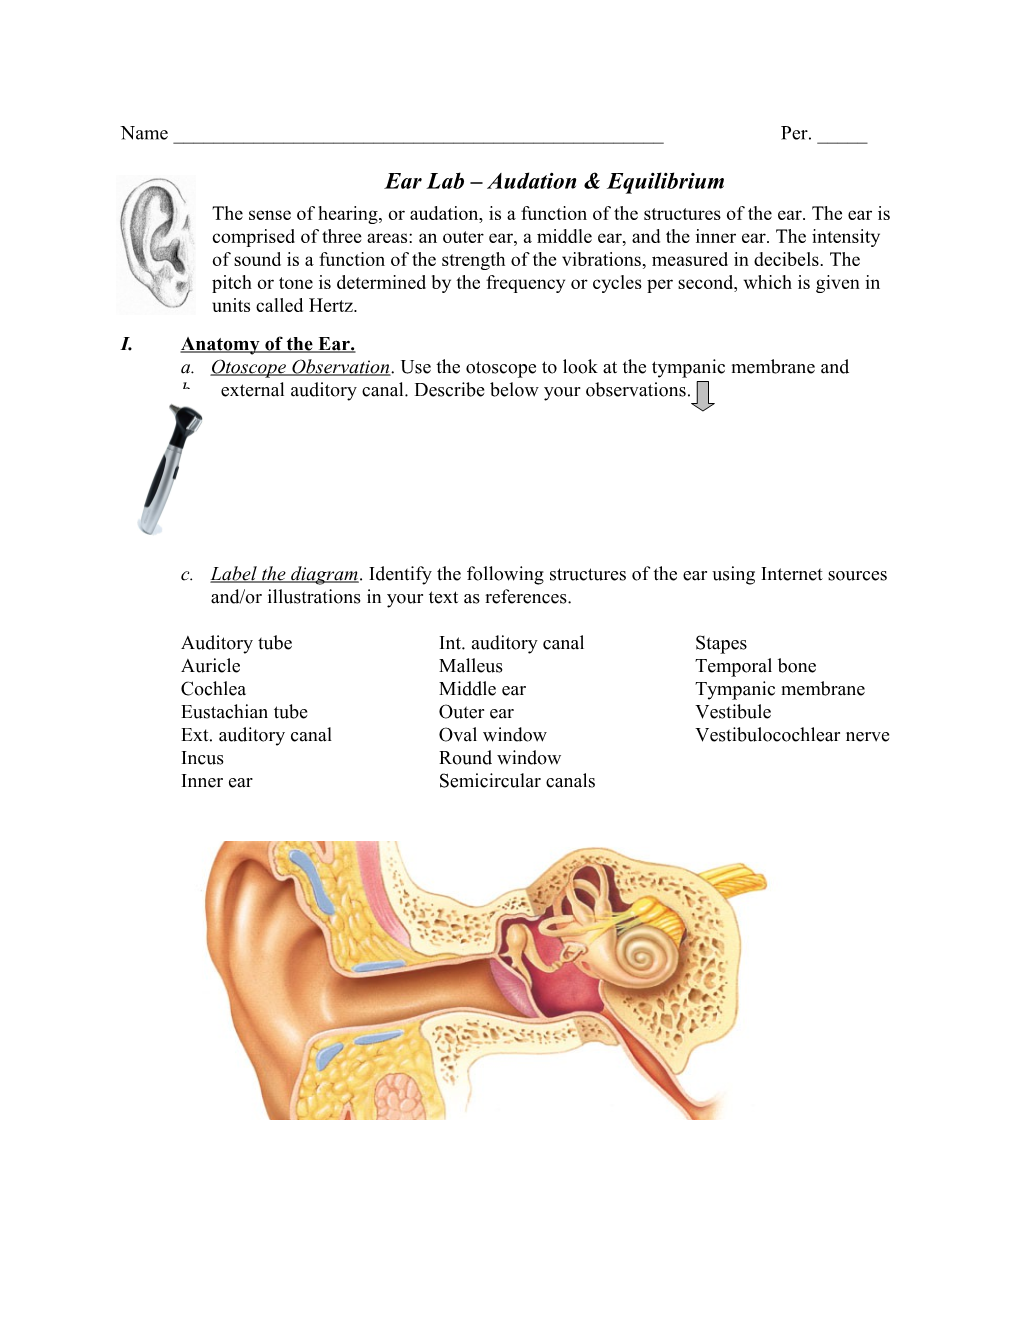 Ear Lab Audation & Equilibrium